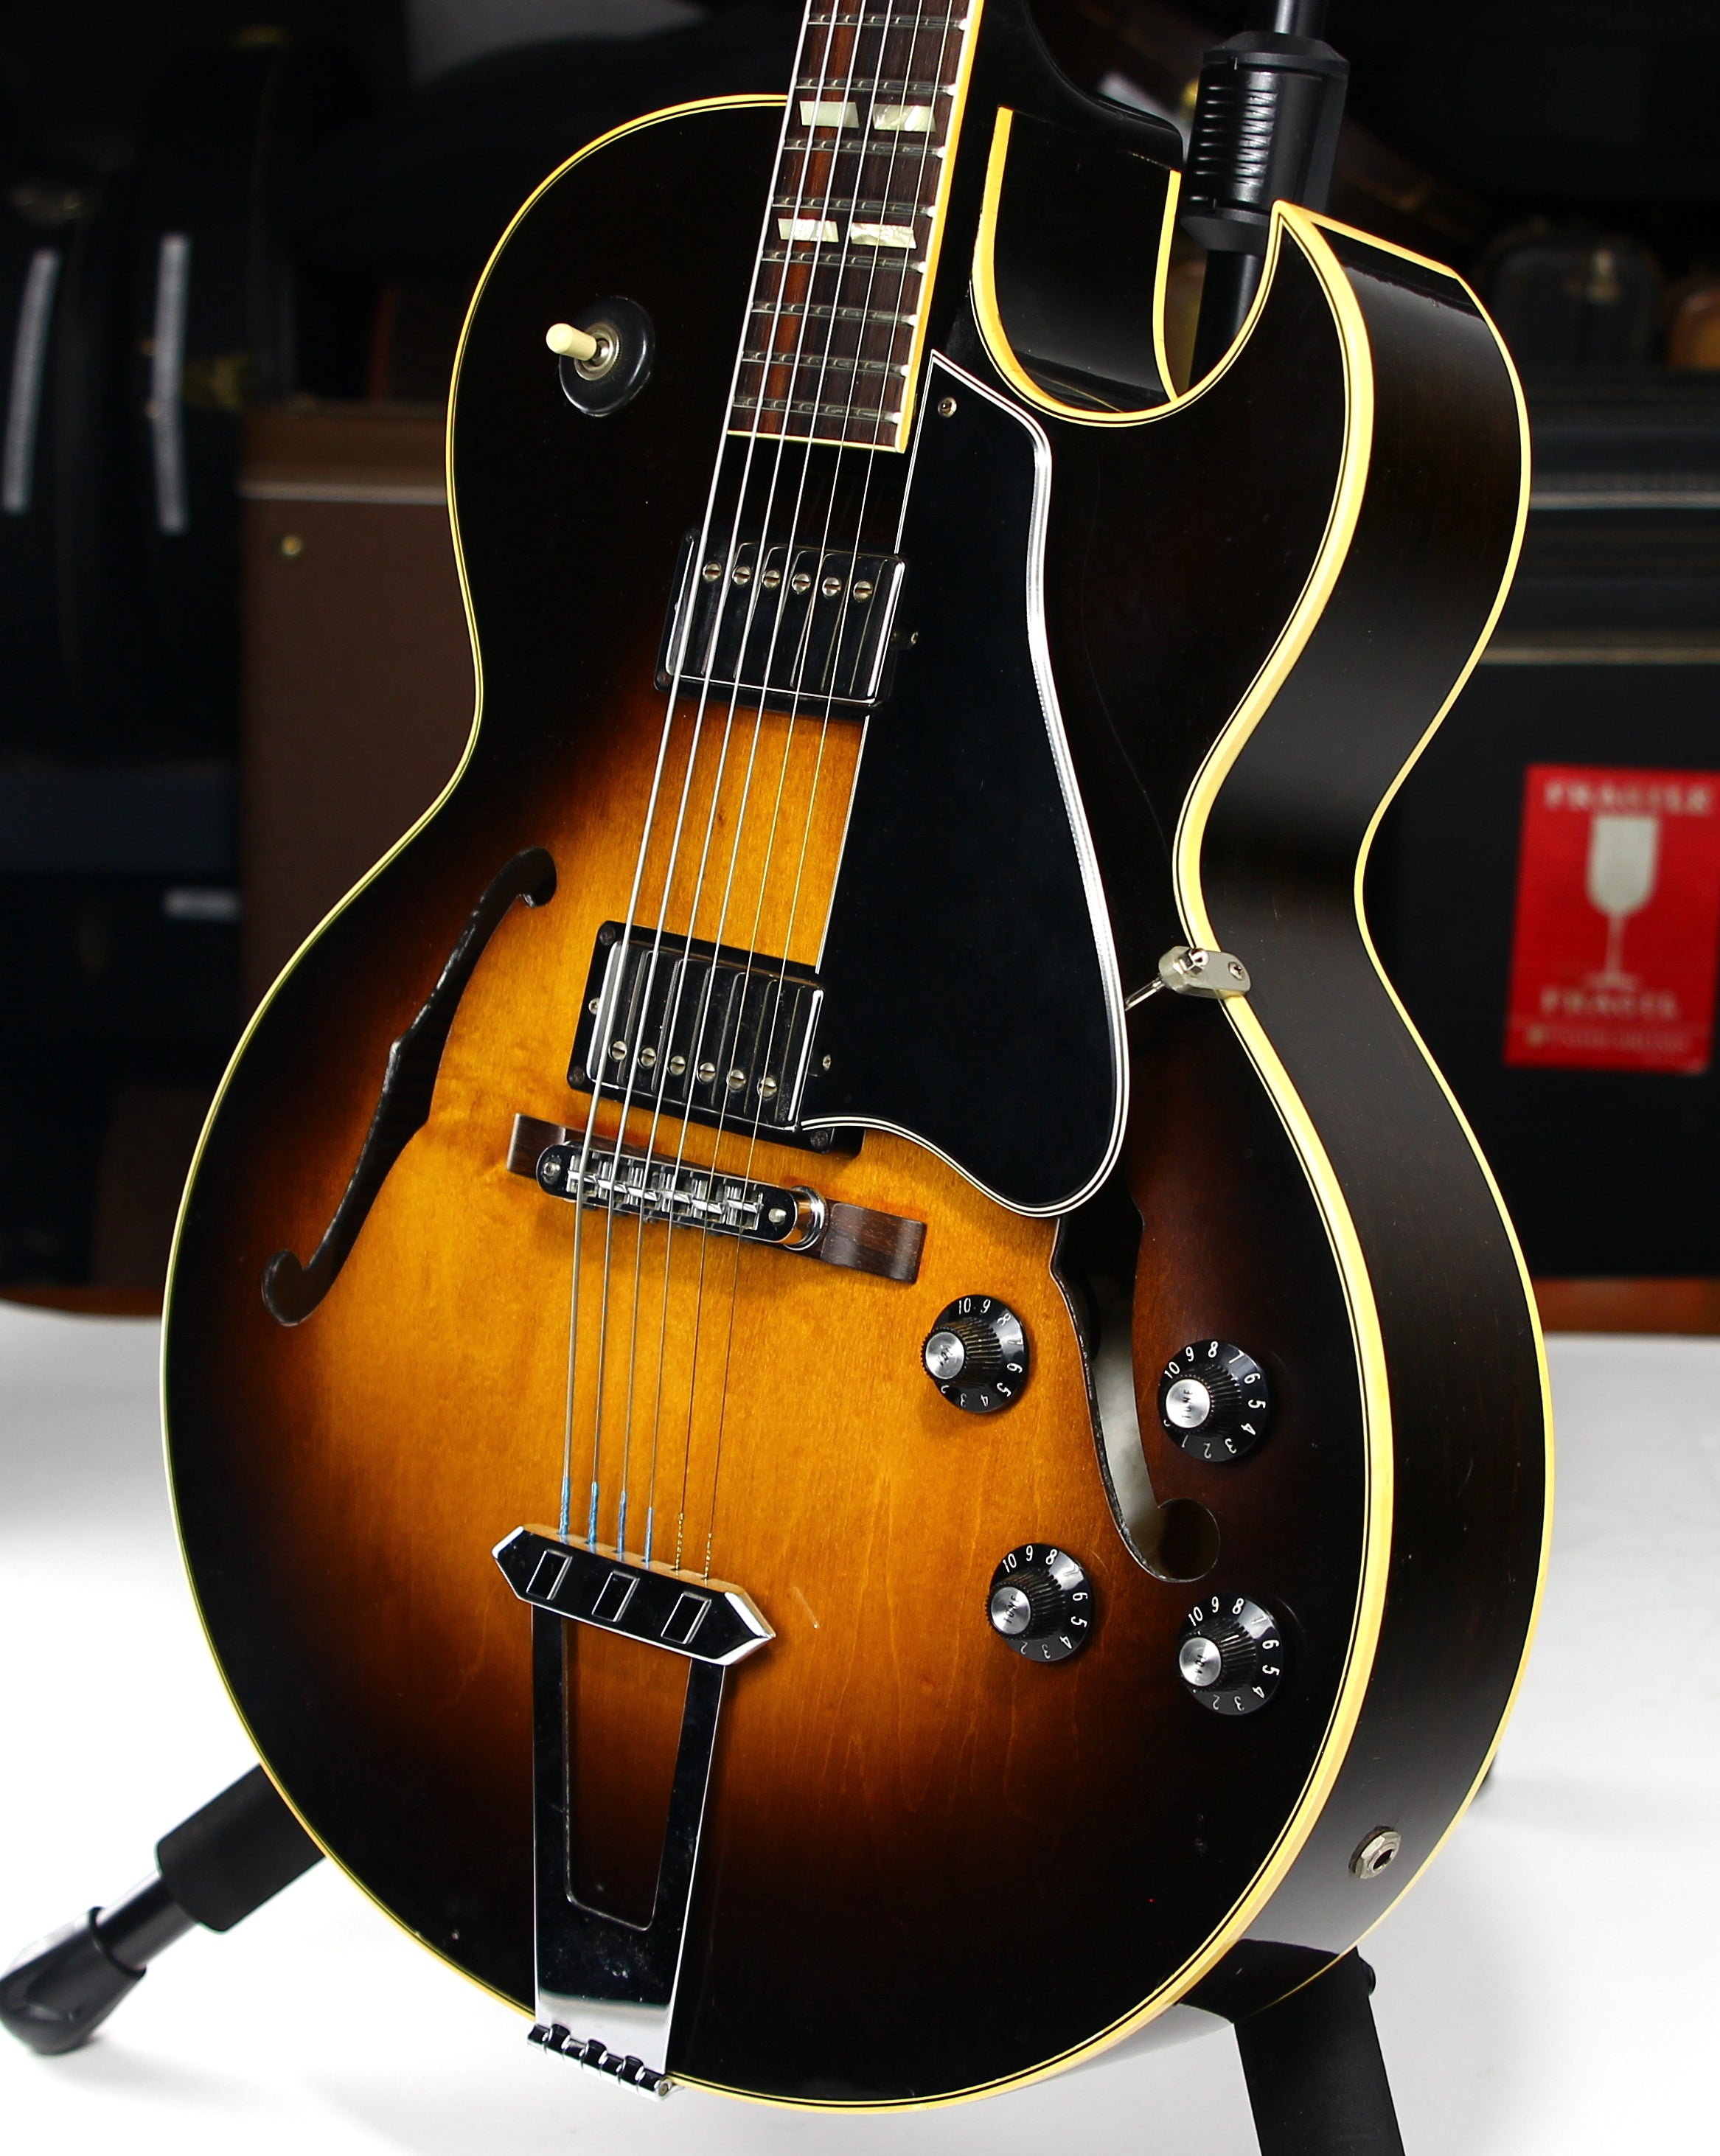 *SOLD*  1980 Gibson ES-175 D Sunburst Jazz Archtop Electric Guitar - Tobacco Sunburst, No Breaks, No Repairs!